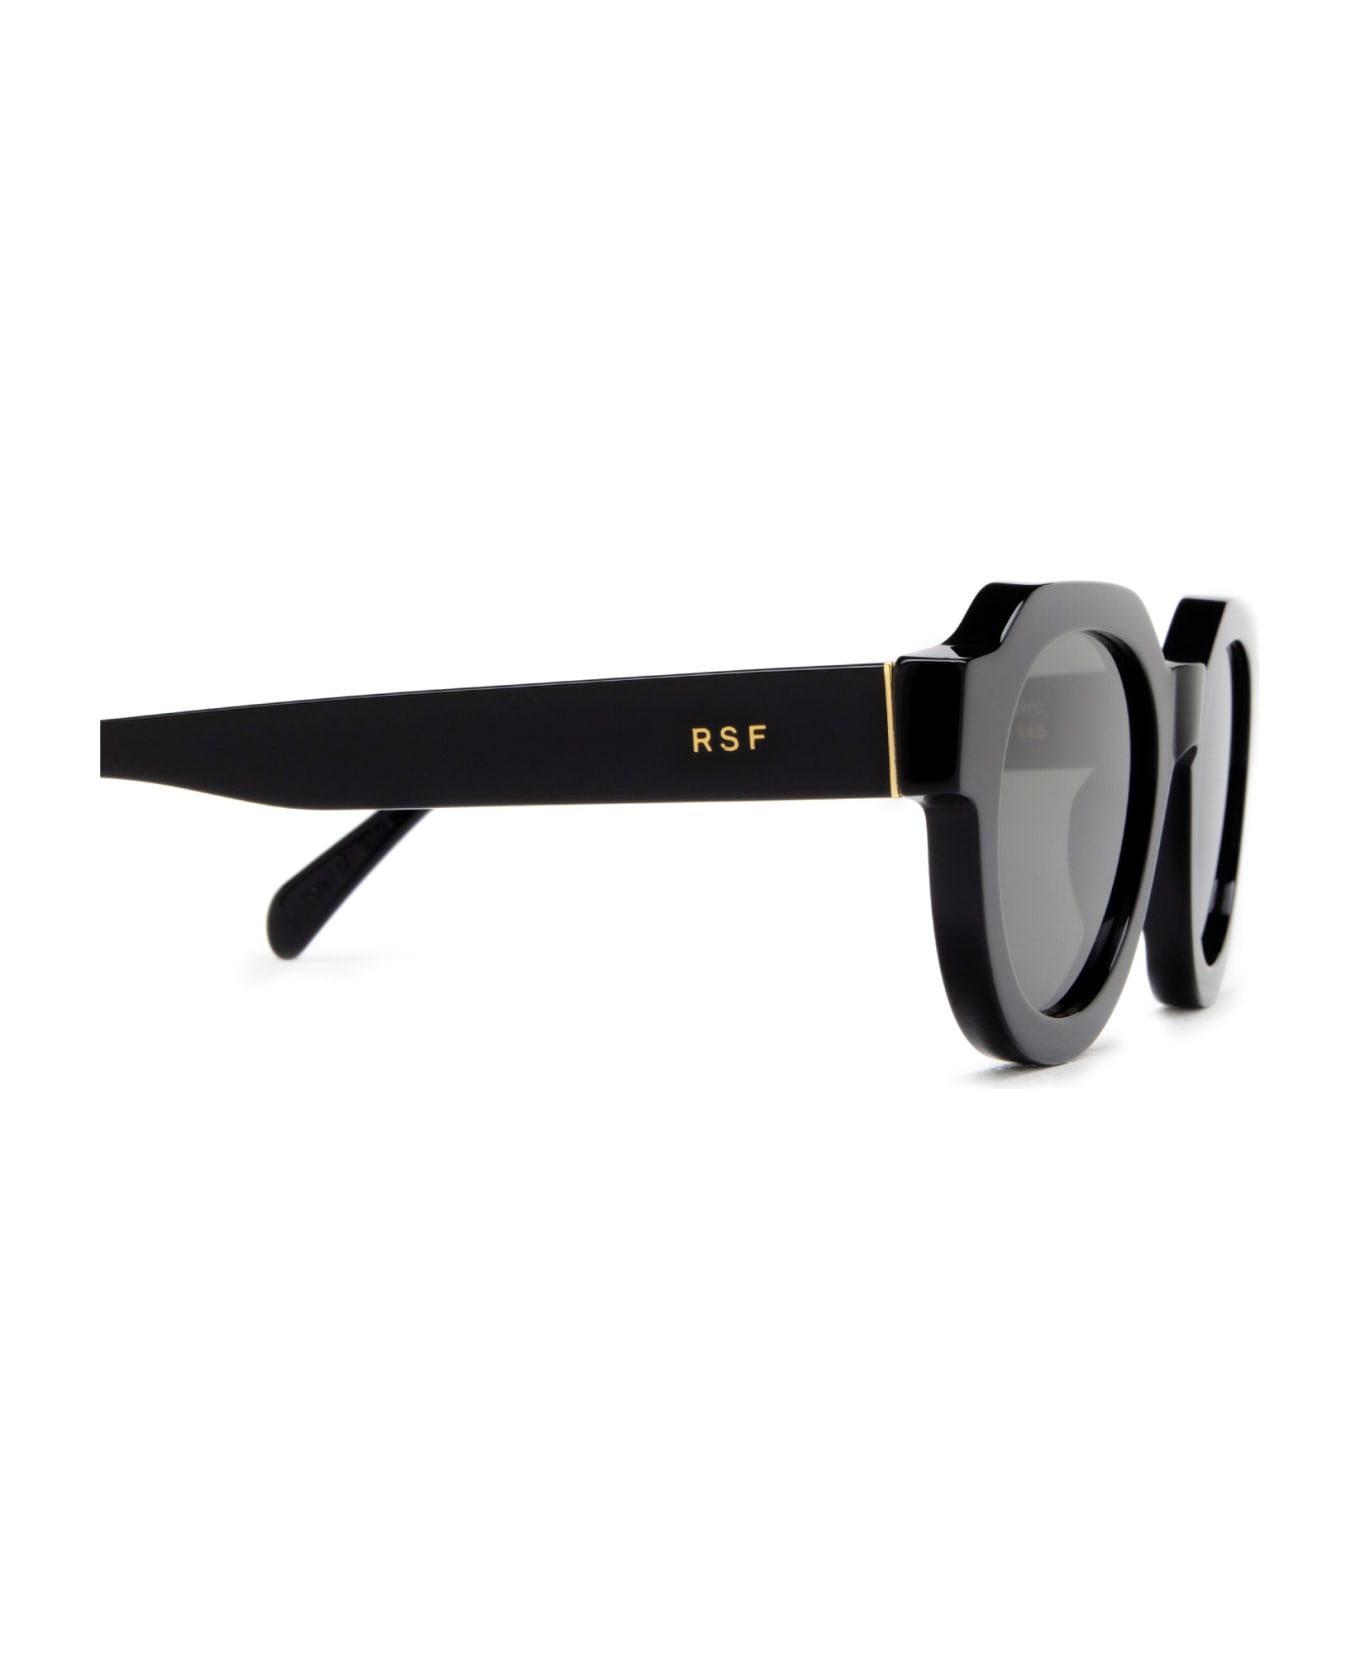 RETROSUPERFUTURE Vostro Black Sunglasses - Black